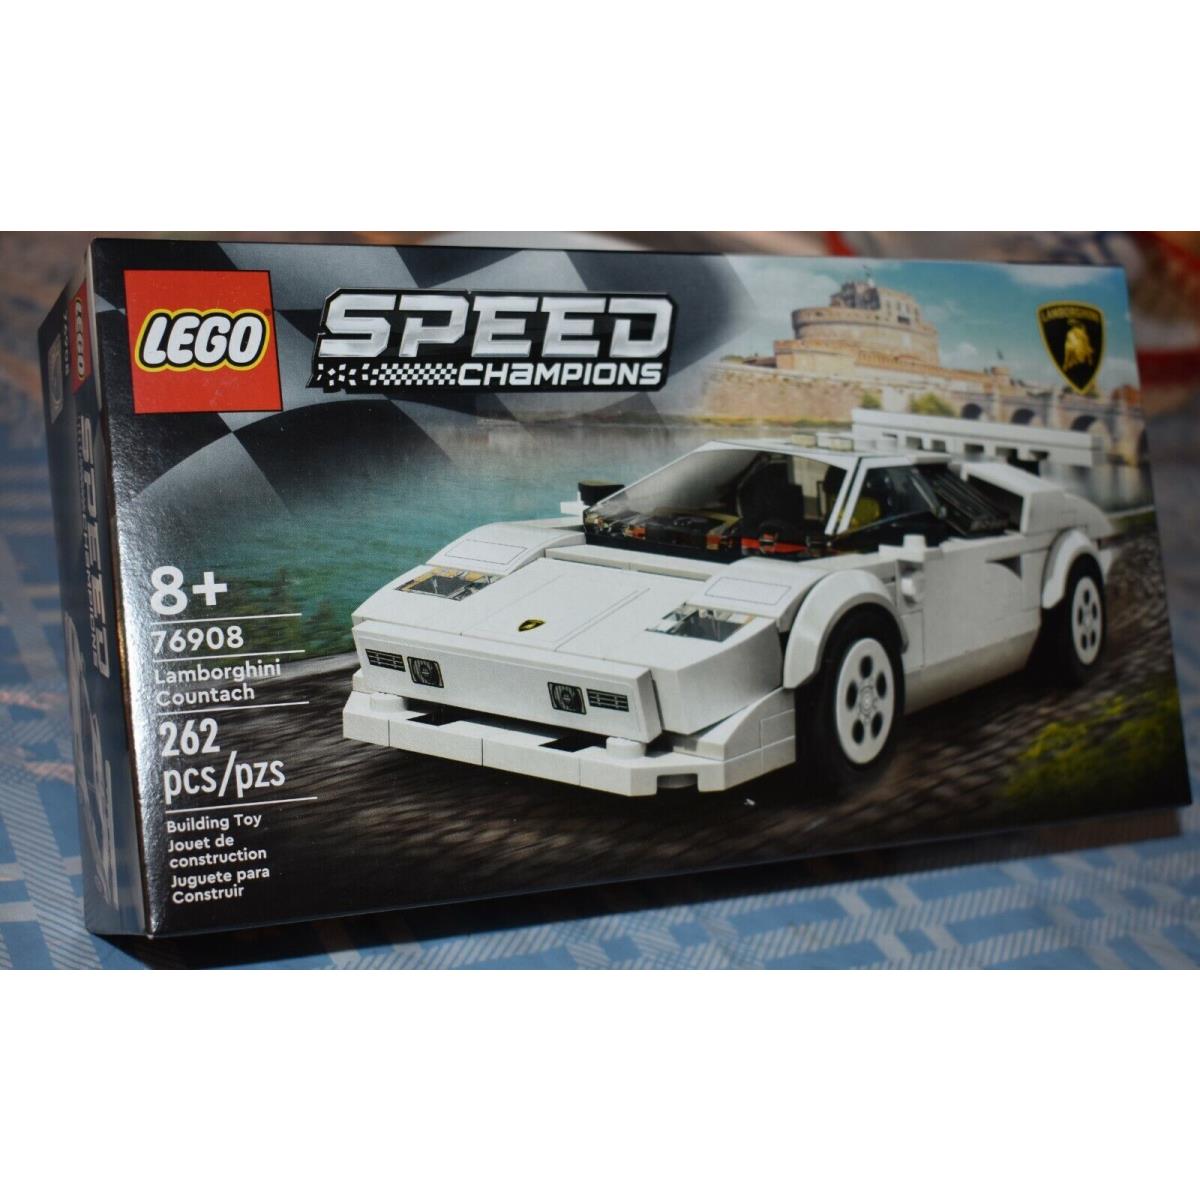 Lego Speed Champions 76908 Lamborghini Coutach 262 Pcs